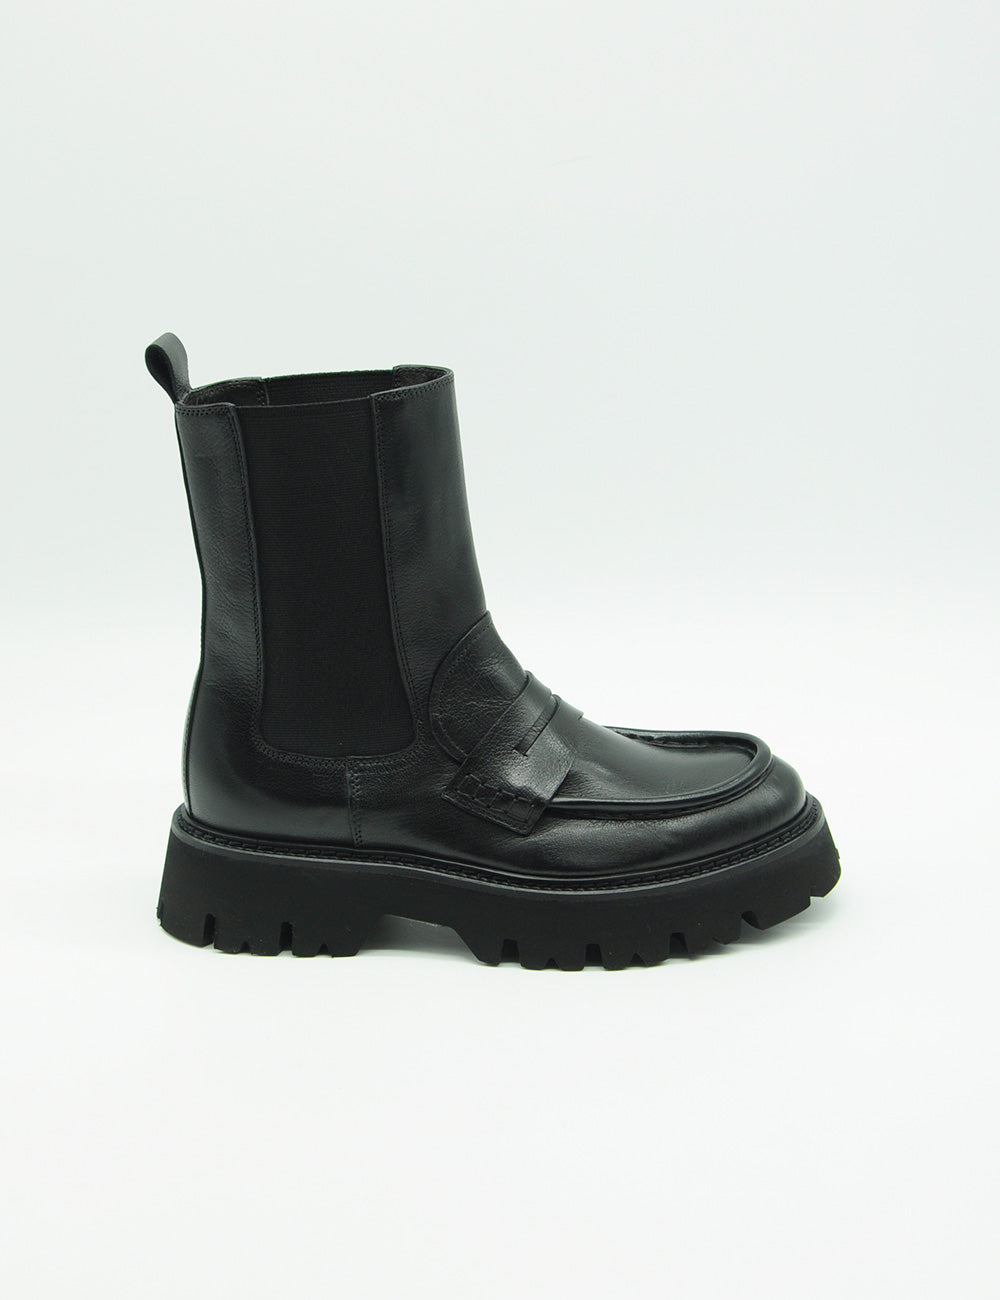 Corvari Black Ankle Boot